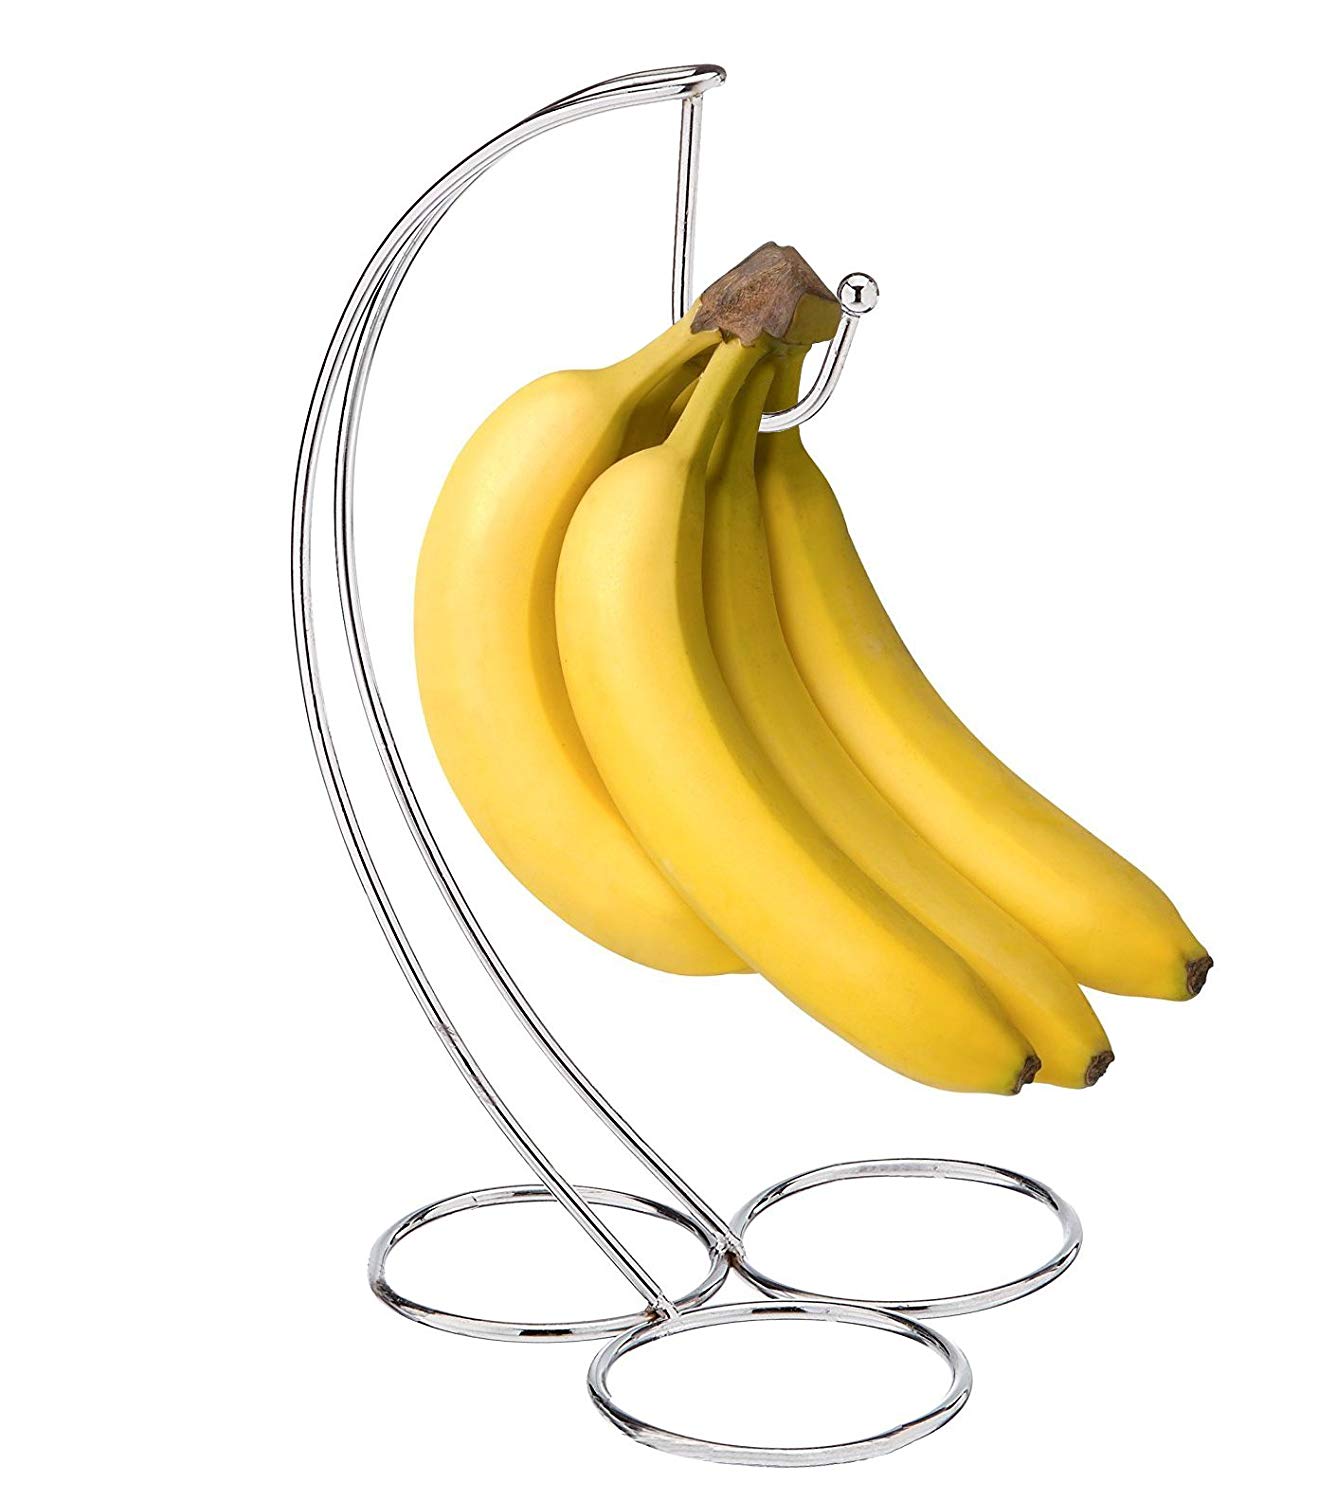 Clipart banana banaba. Hanger holder stand grape